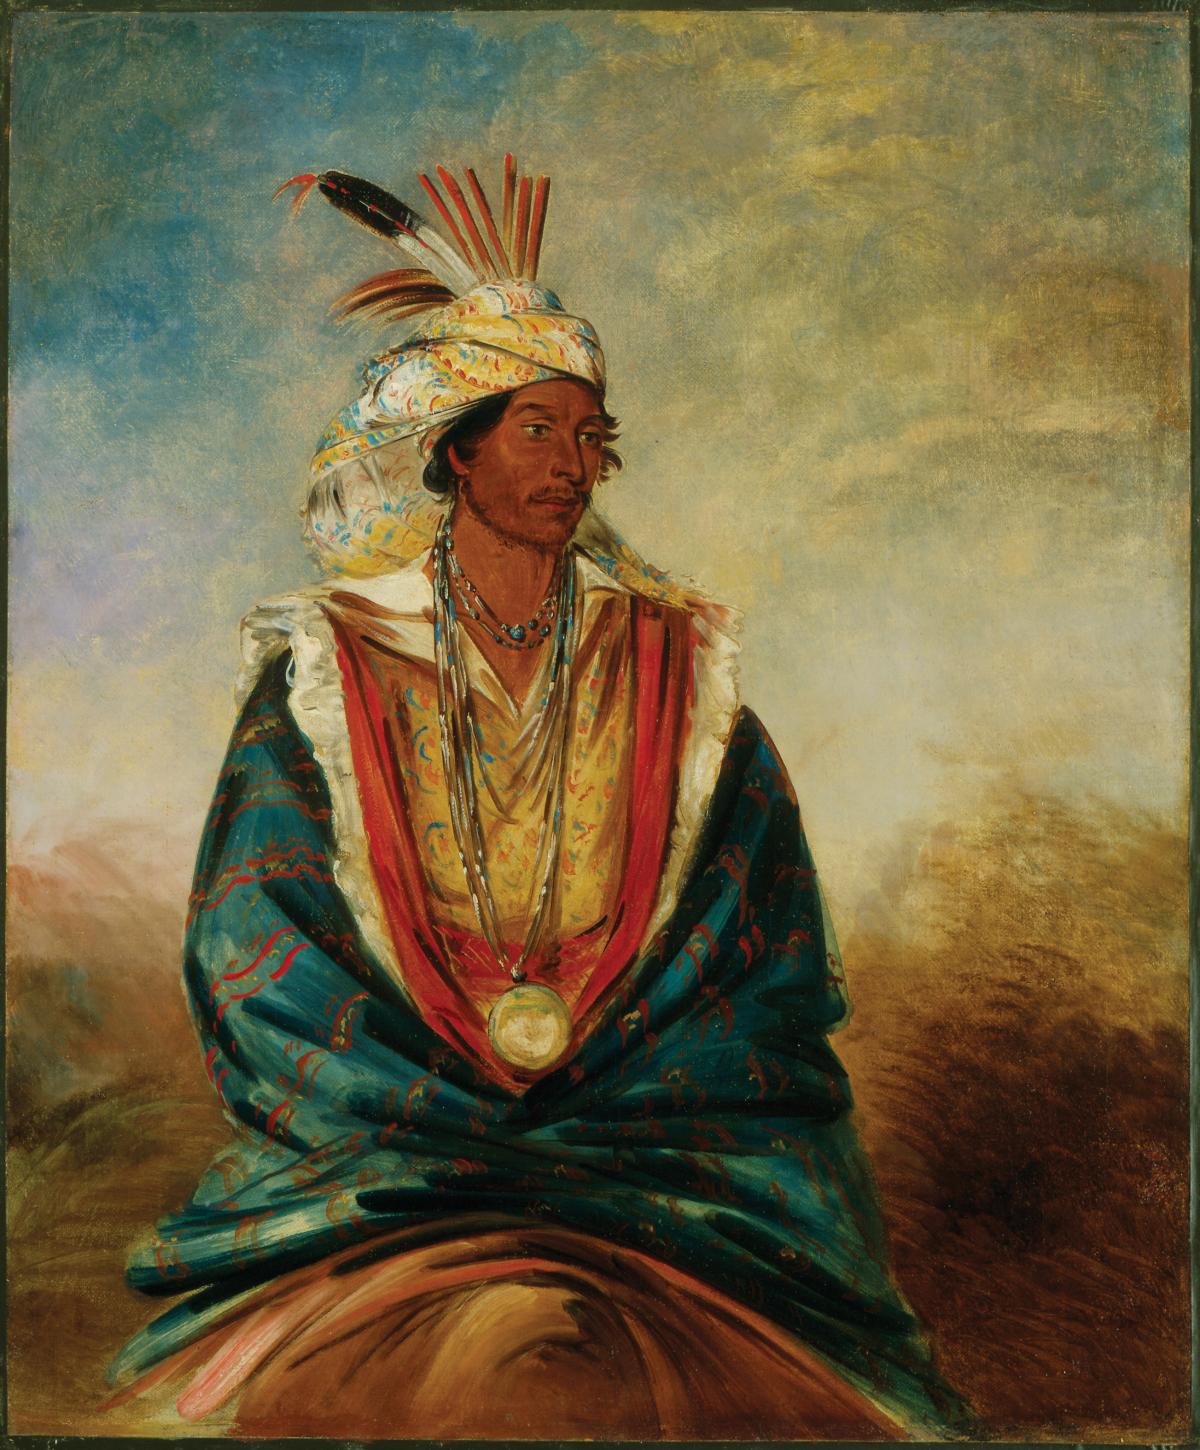 seated creek warrior, wearing traditional feathered headdress, cloak